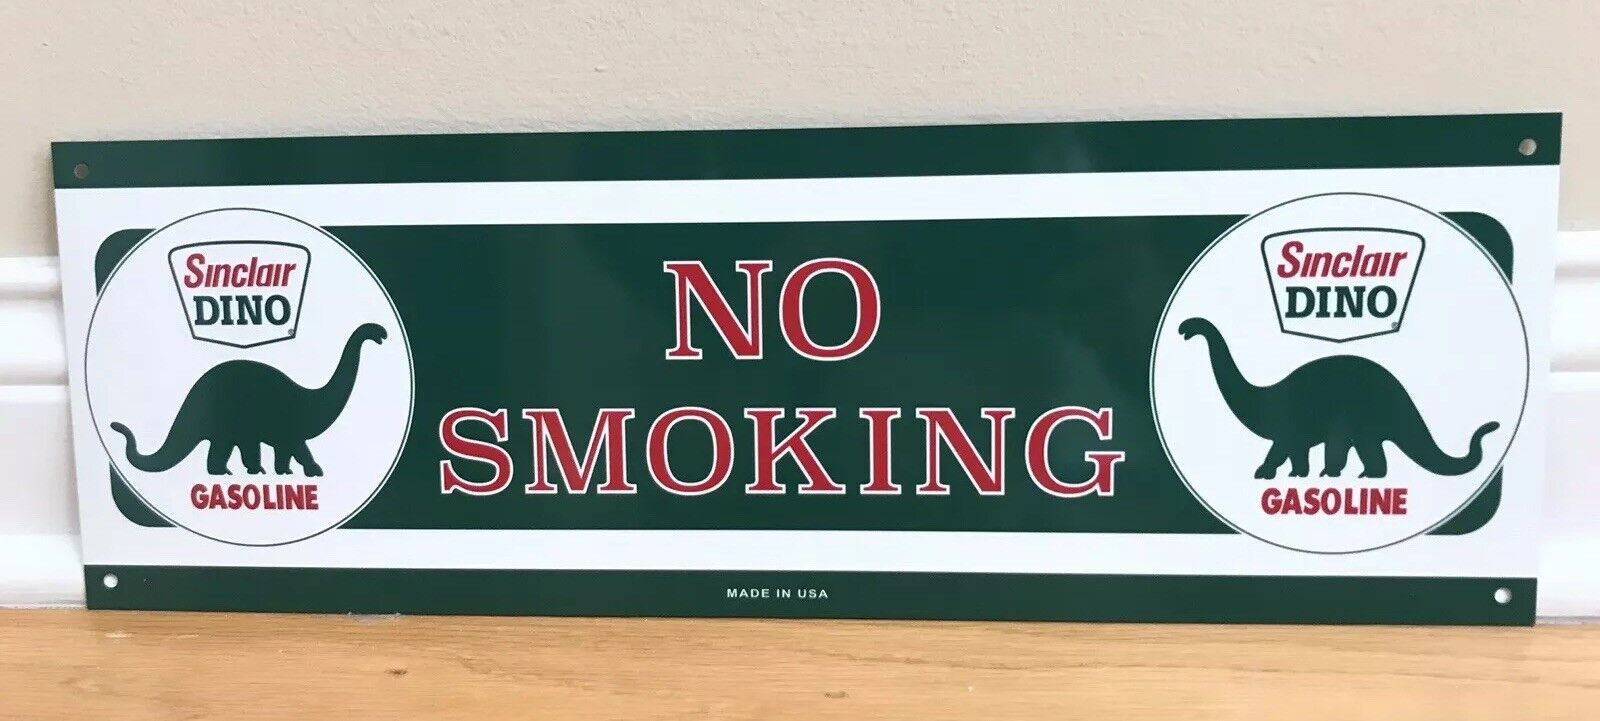 Sinclair Dino No Smoking Pump Reproduction Garage Sign